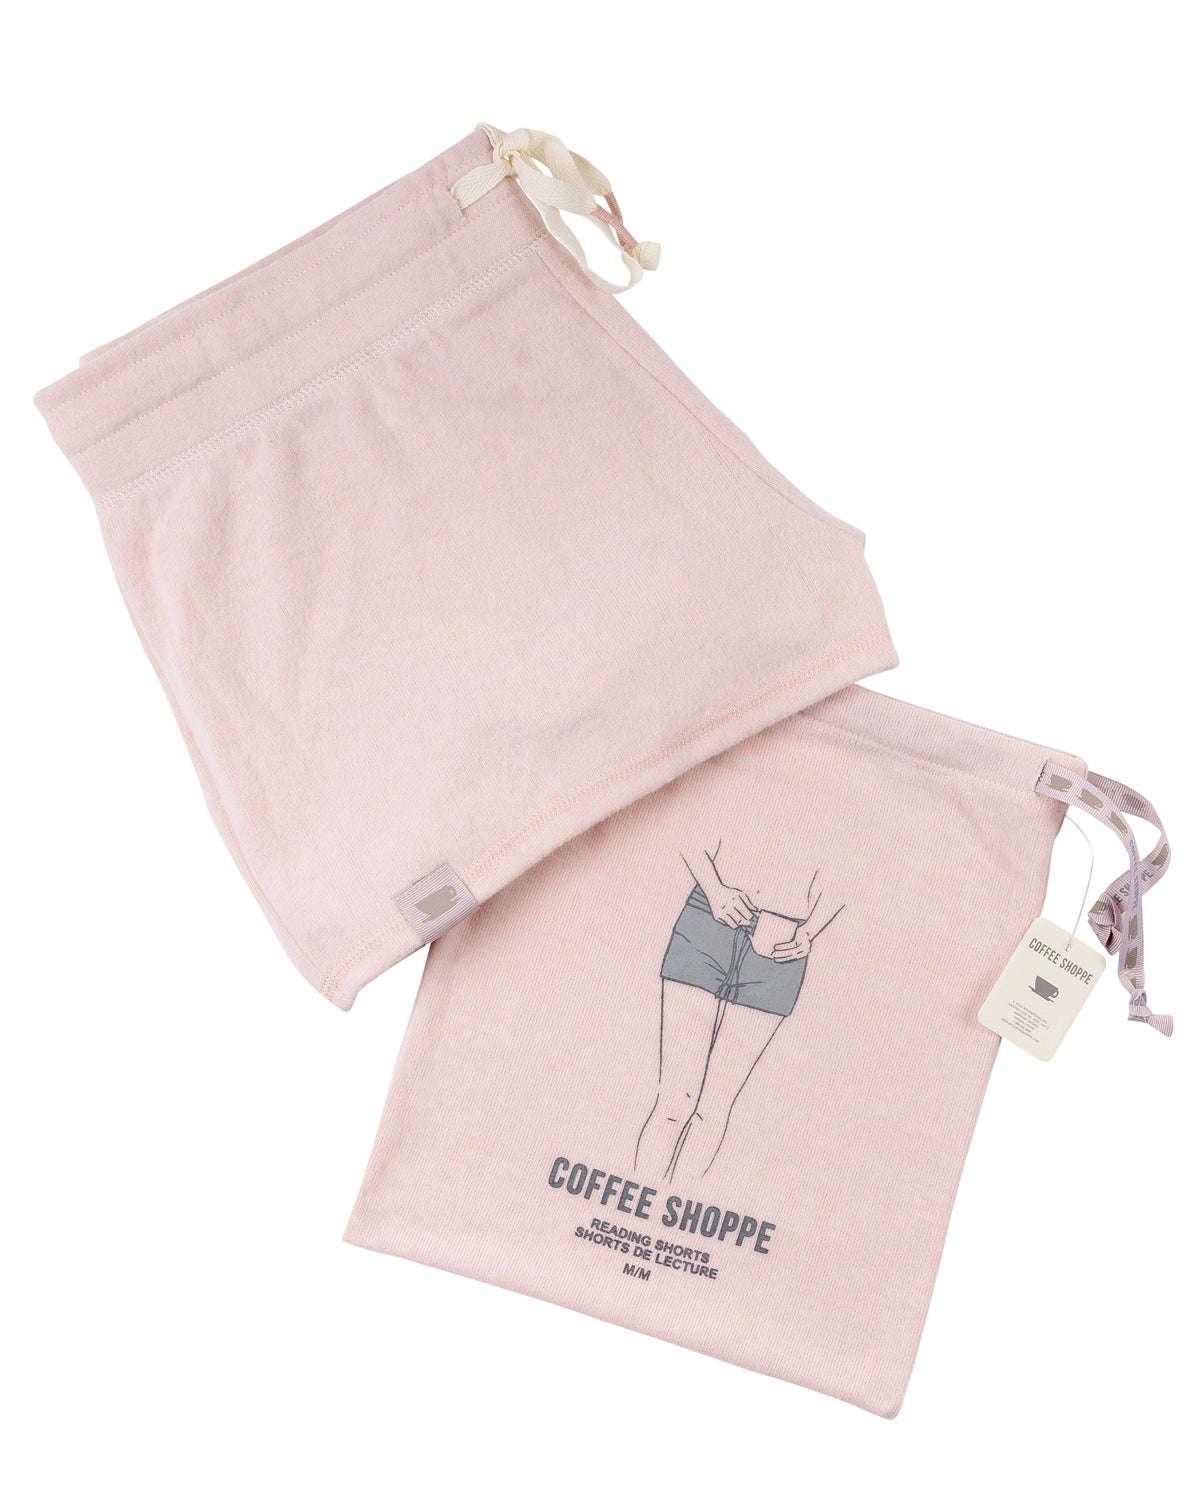 Short & Sweet Reading Shorts - Millennial Pink - LATTELOVE Co.